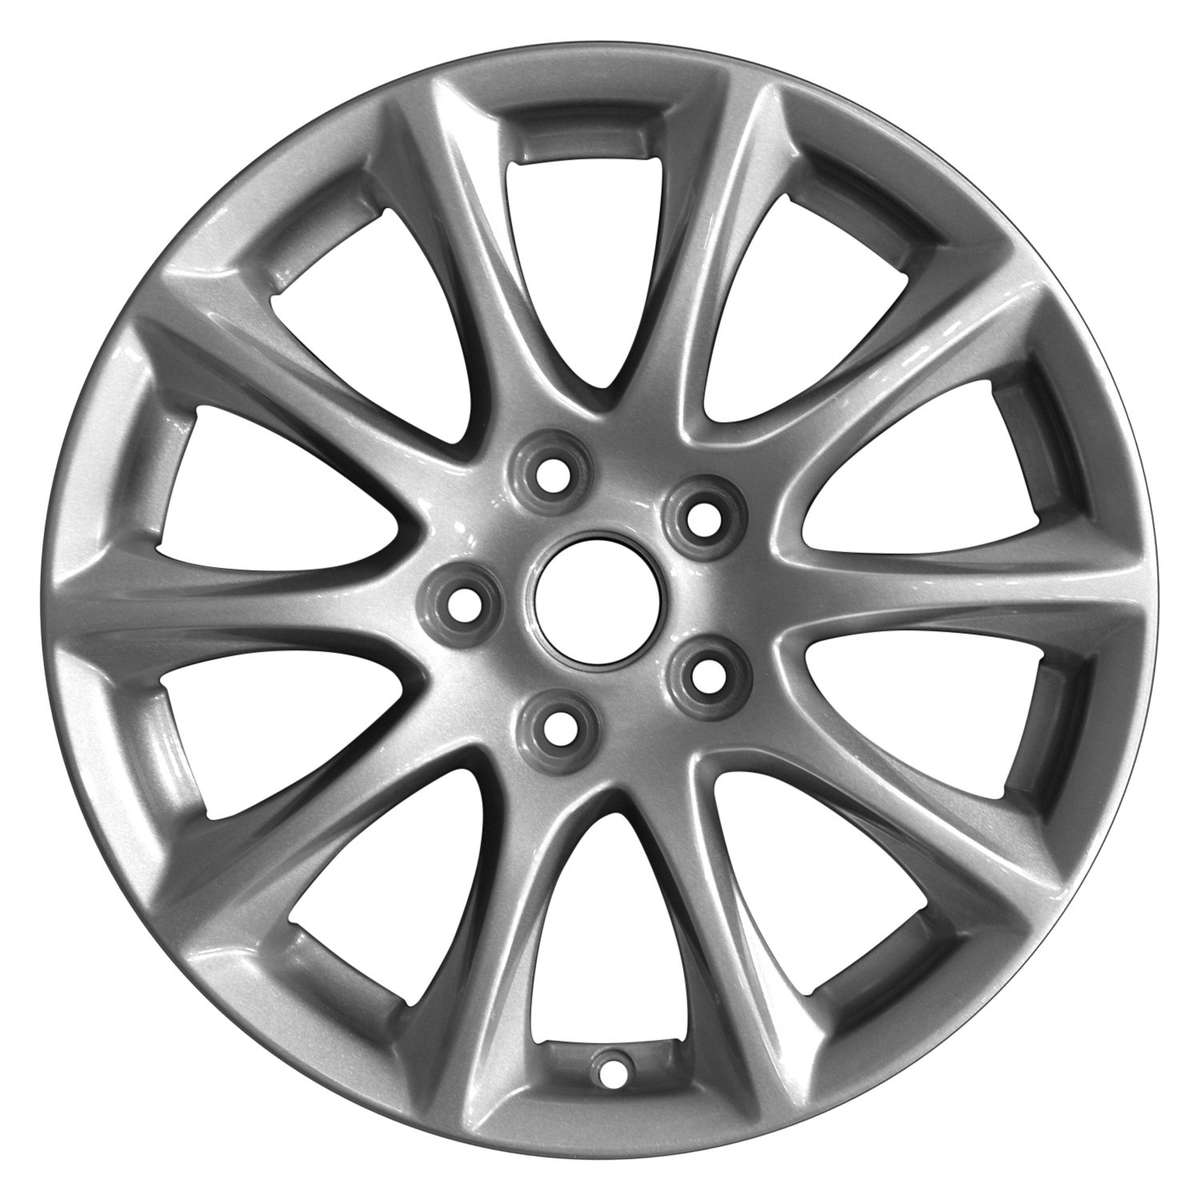 2017 Ford Fusion 16" OEM Wheel Rim W3983S